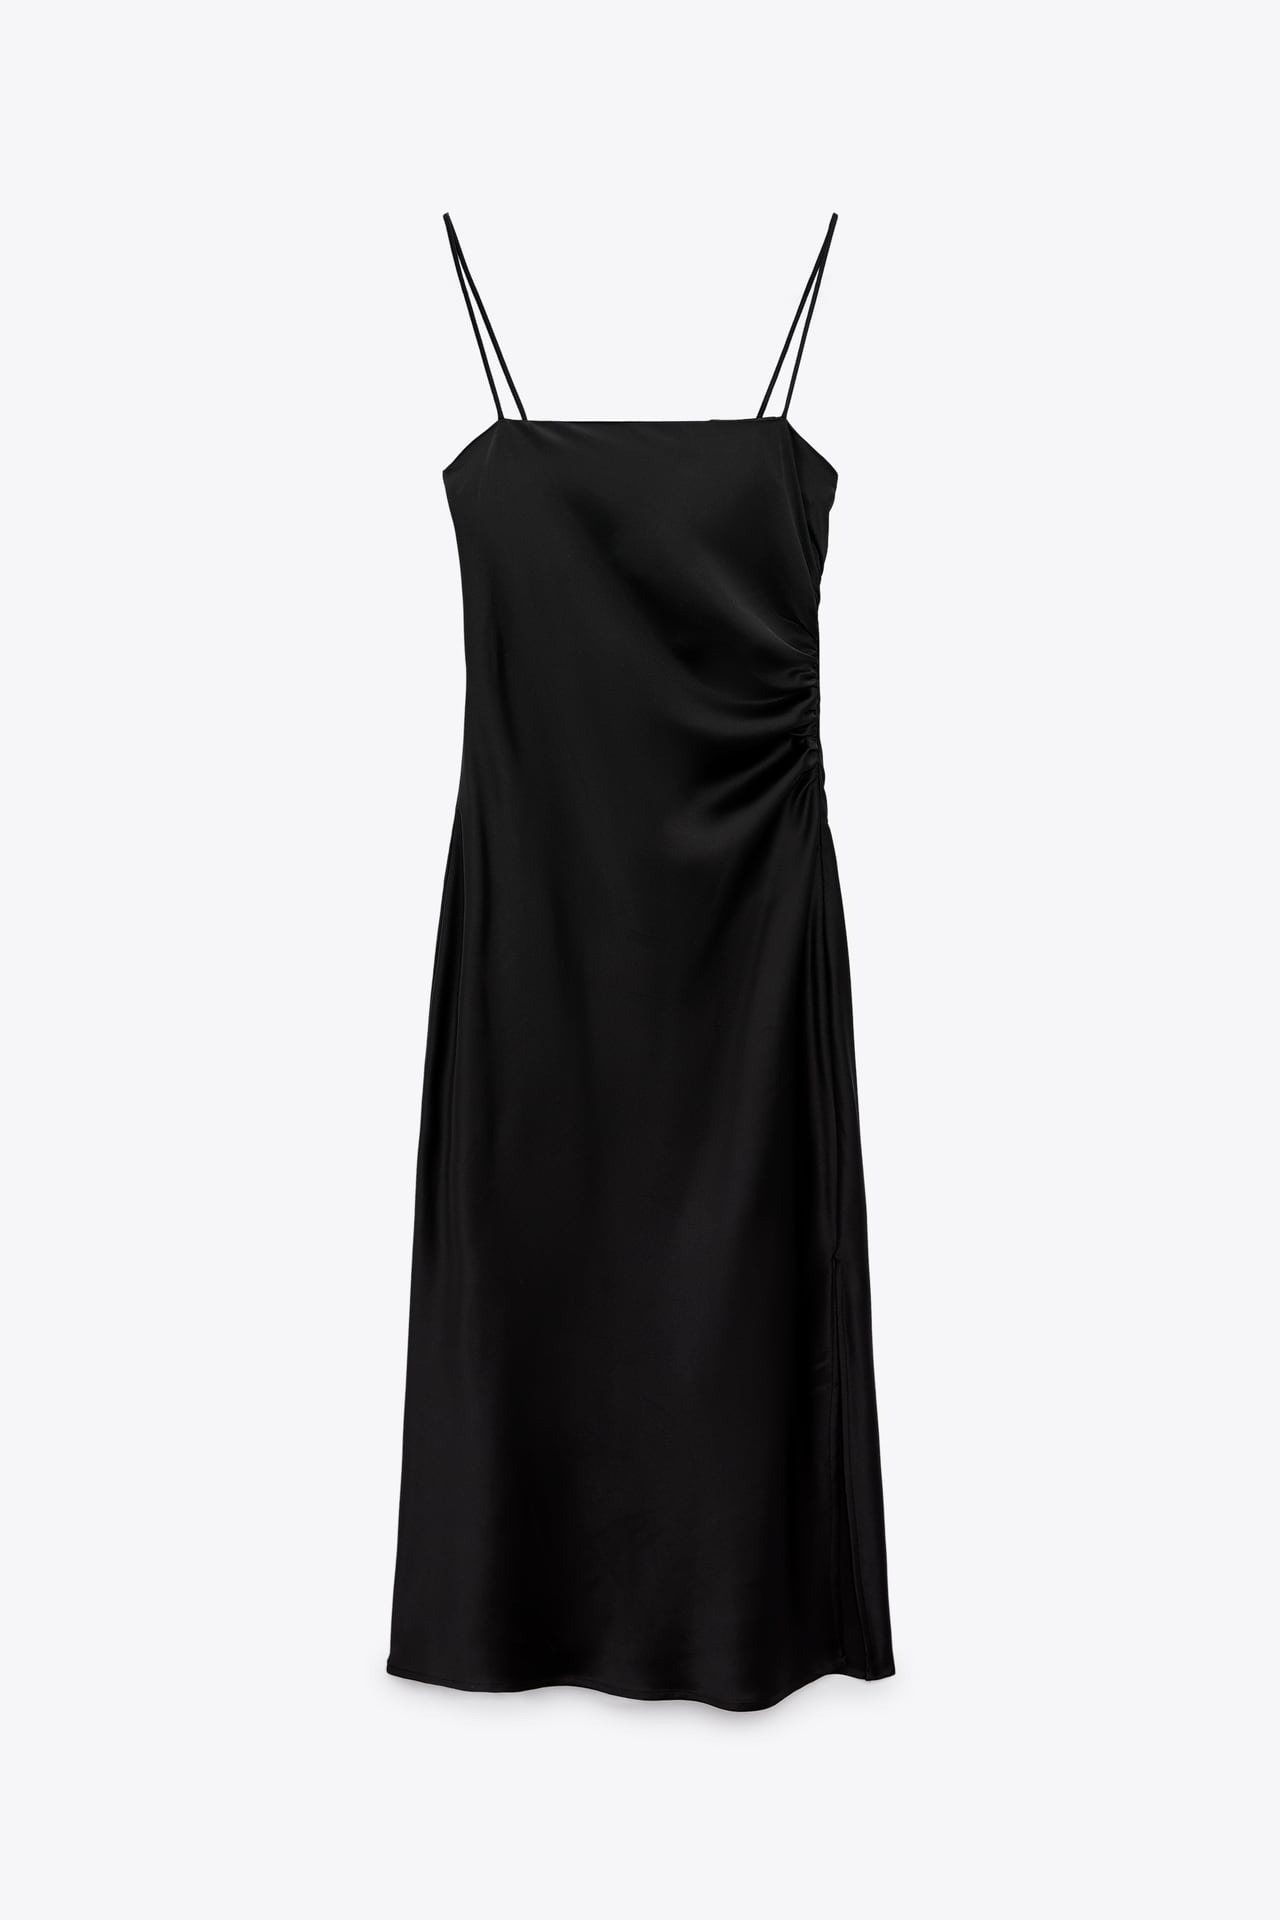 Zara Satin Lingerie Style Dress